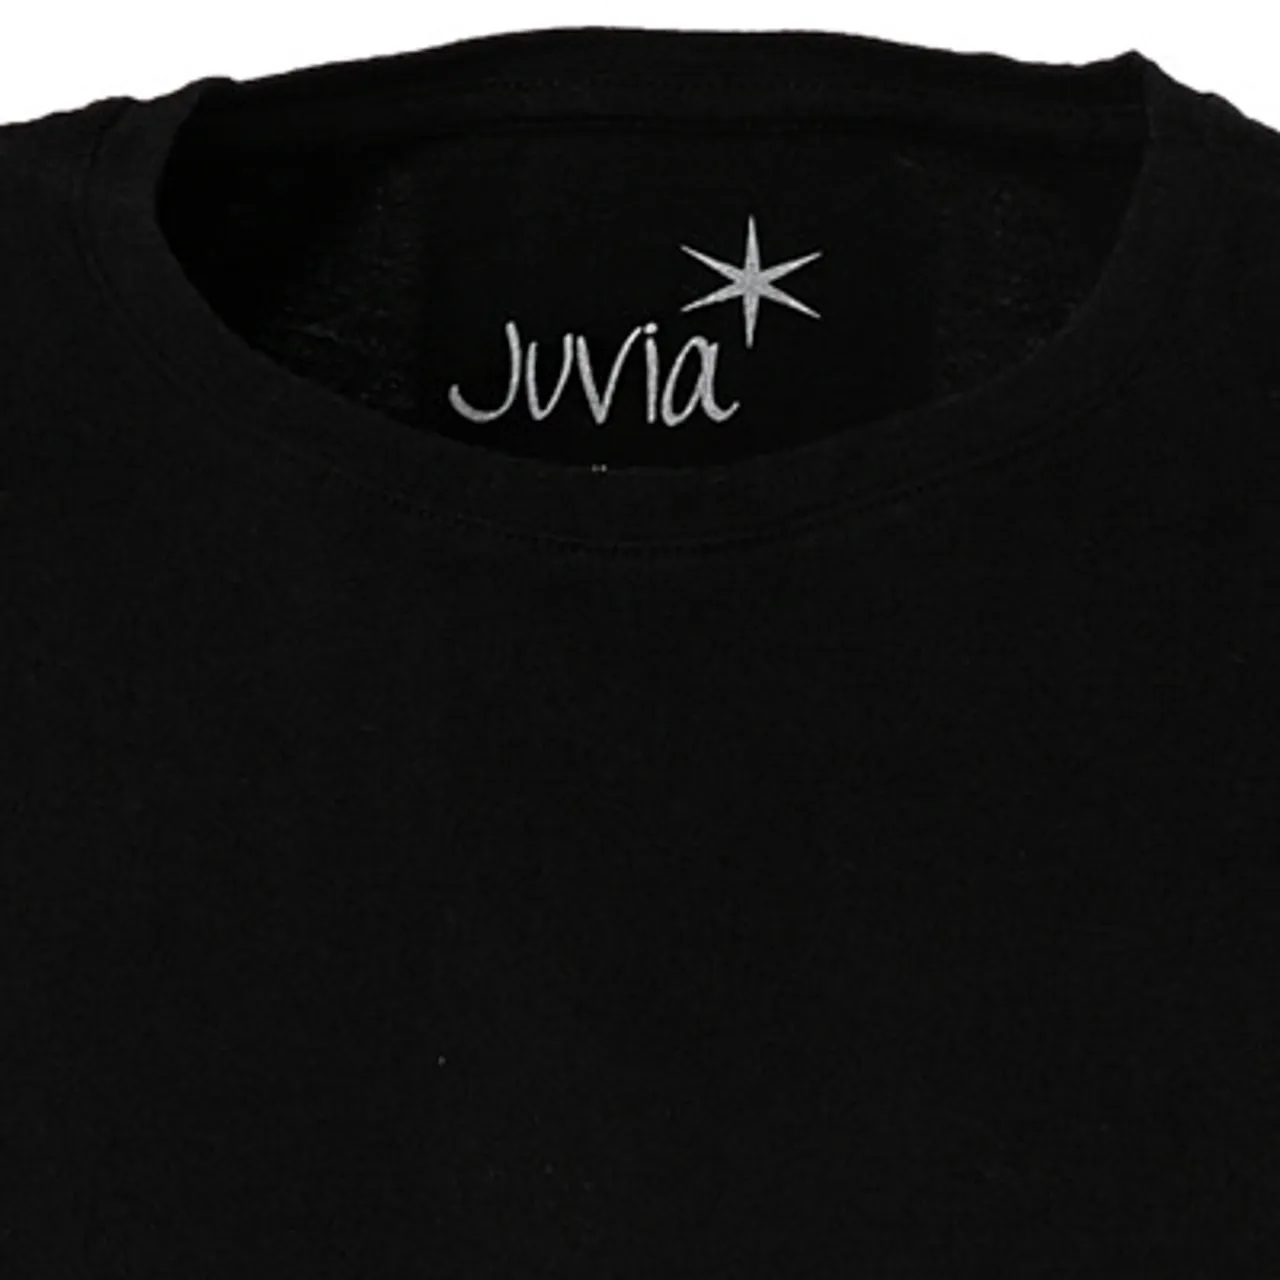 JUVIA Herren T-Shirt schwarz Baumwolle